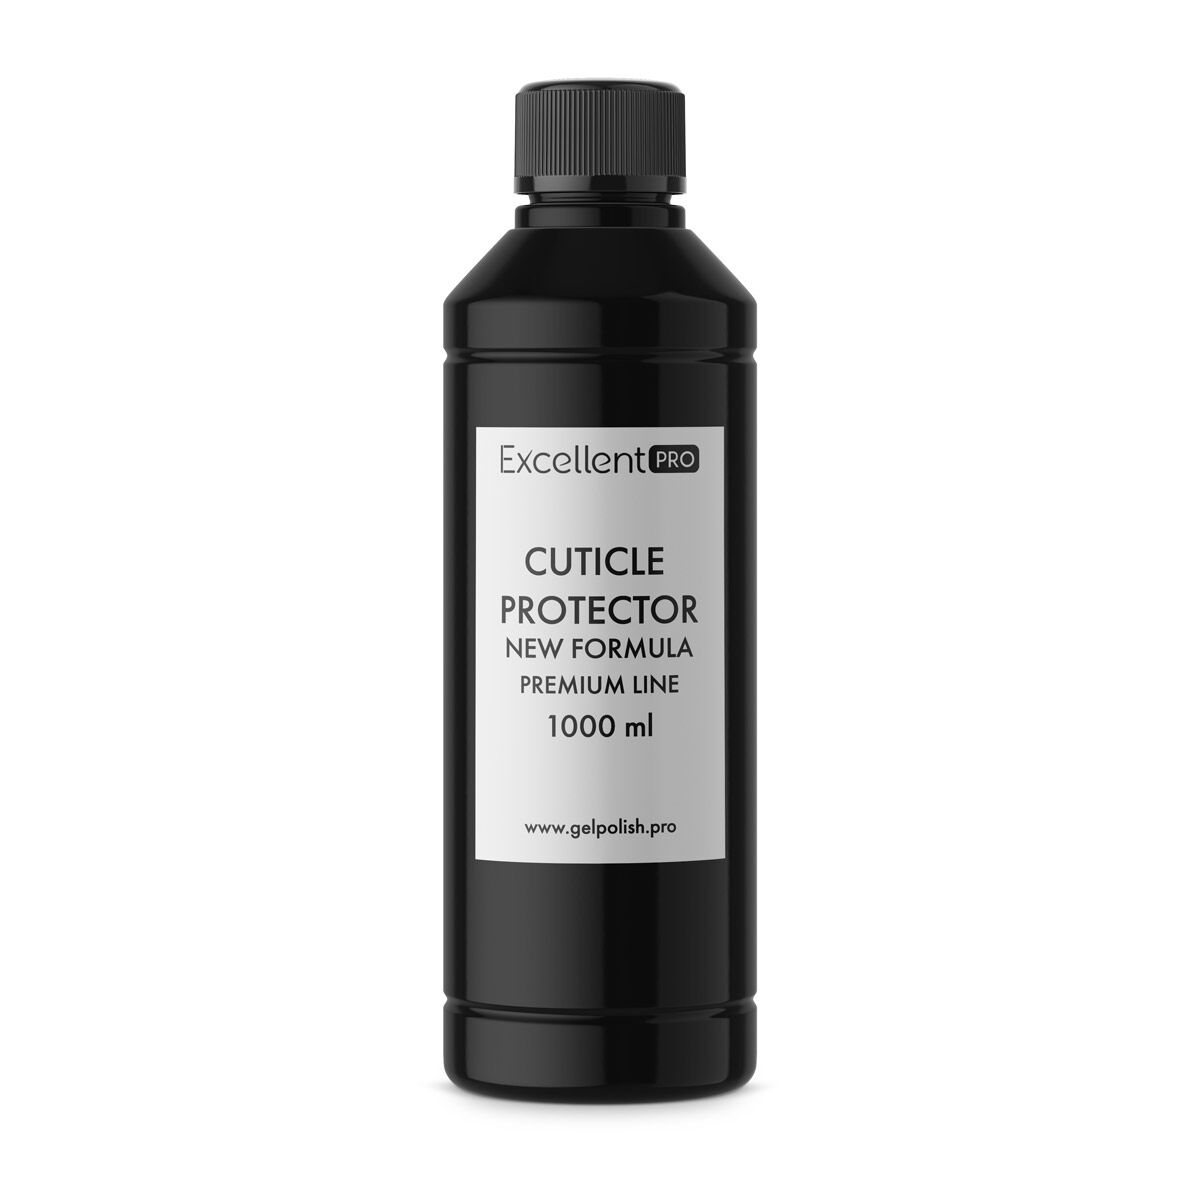 Cuticle protector new formula premium line 1000 ml